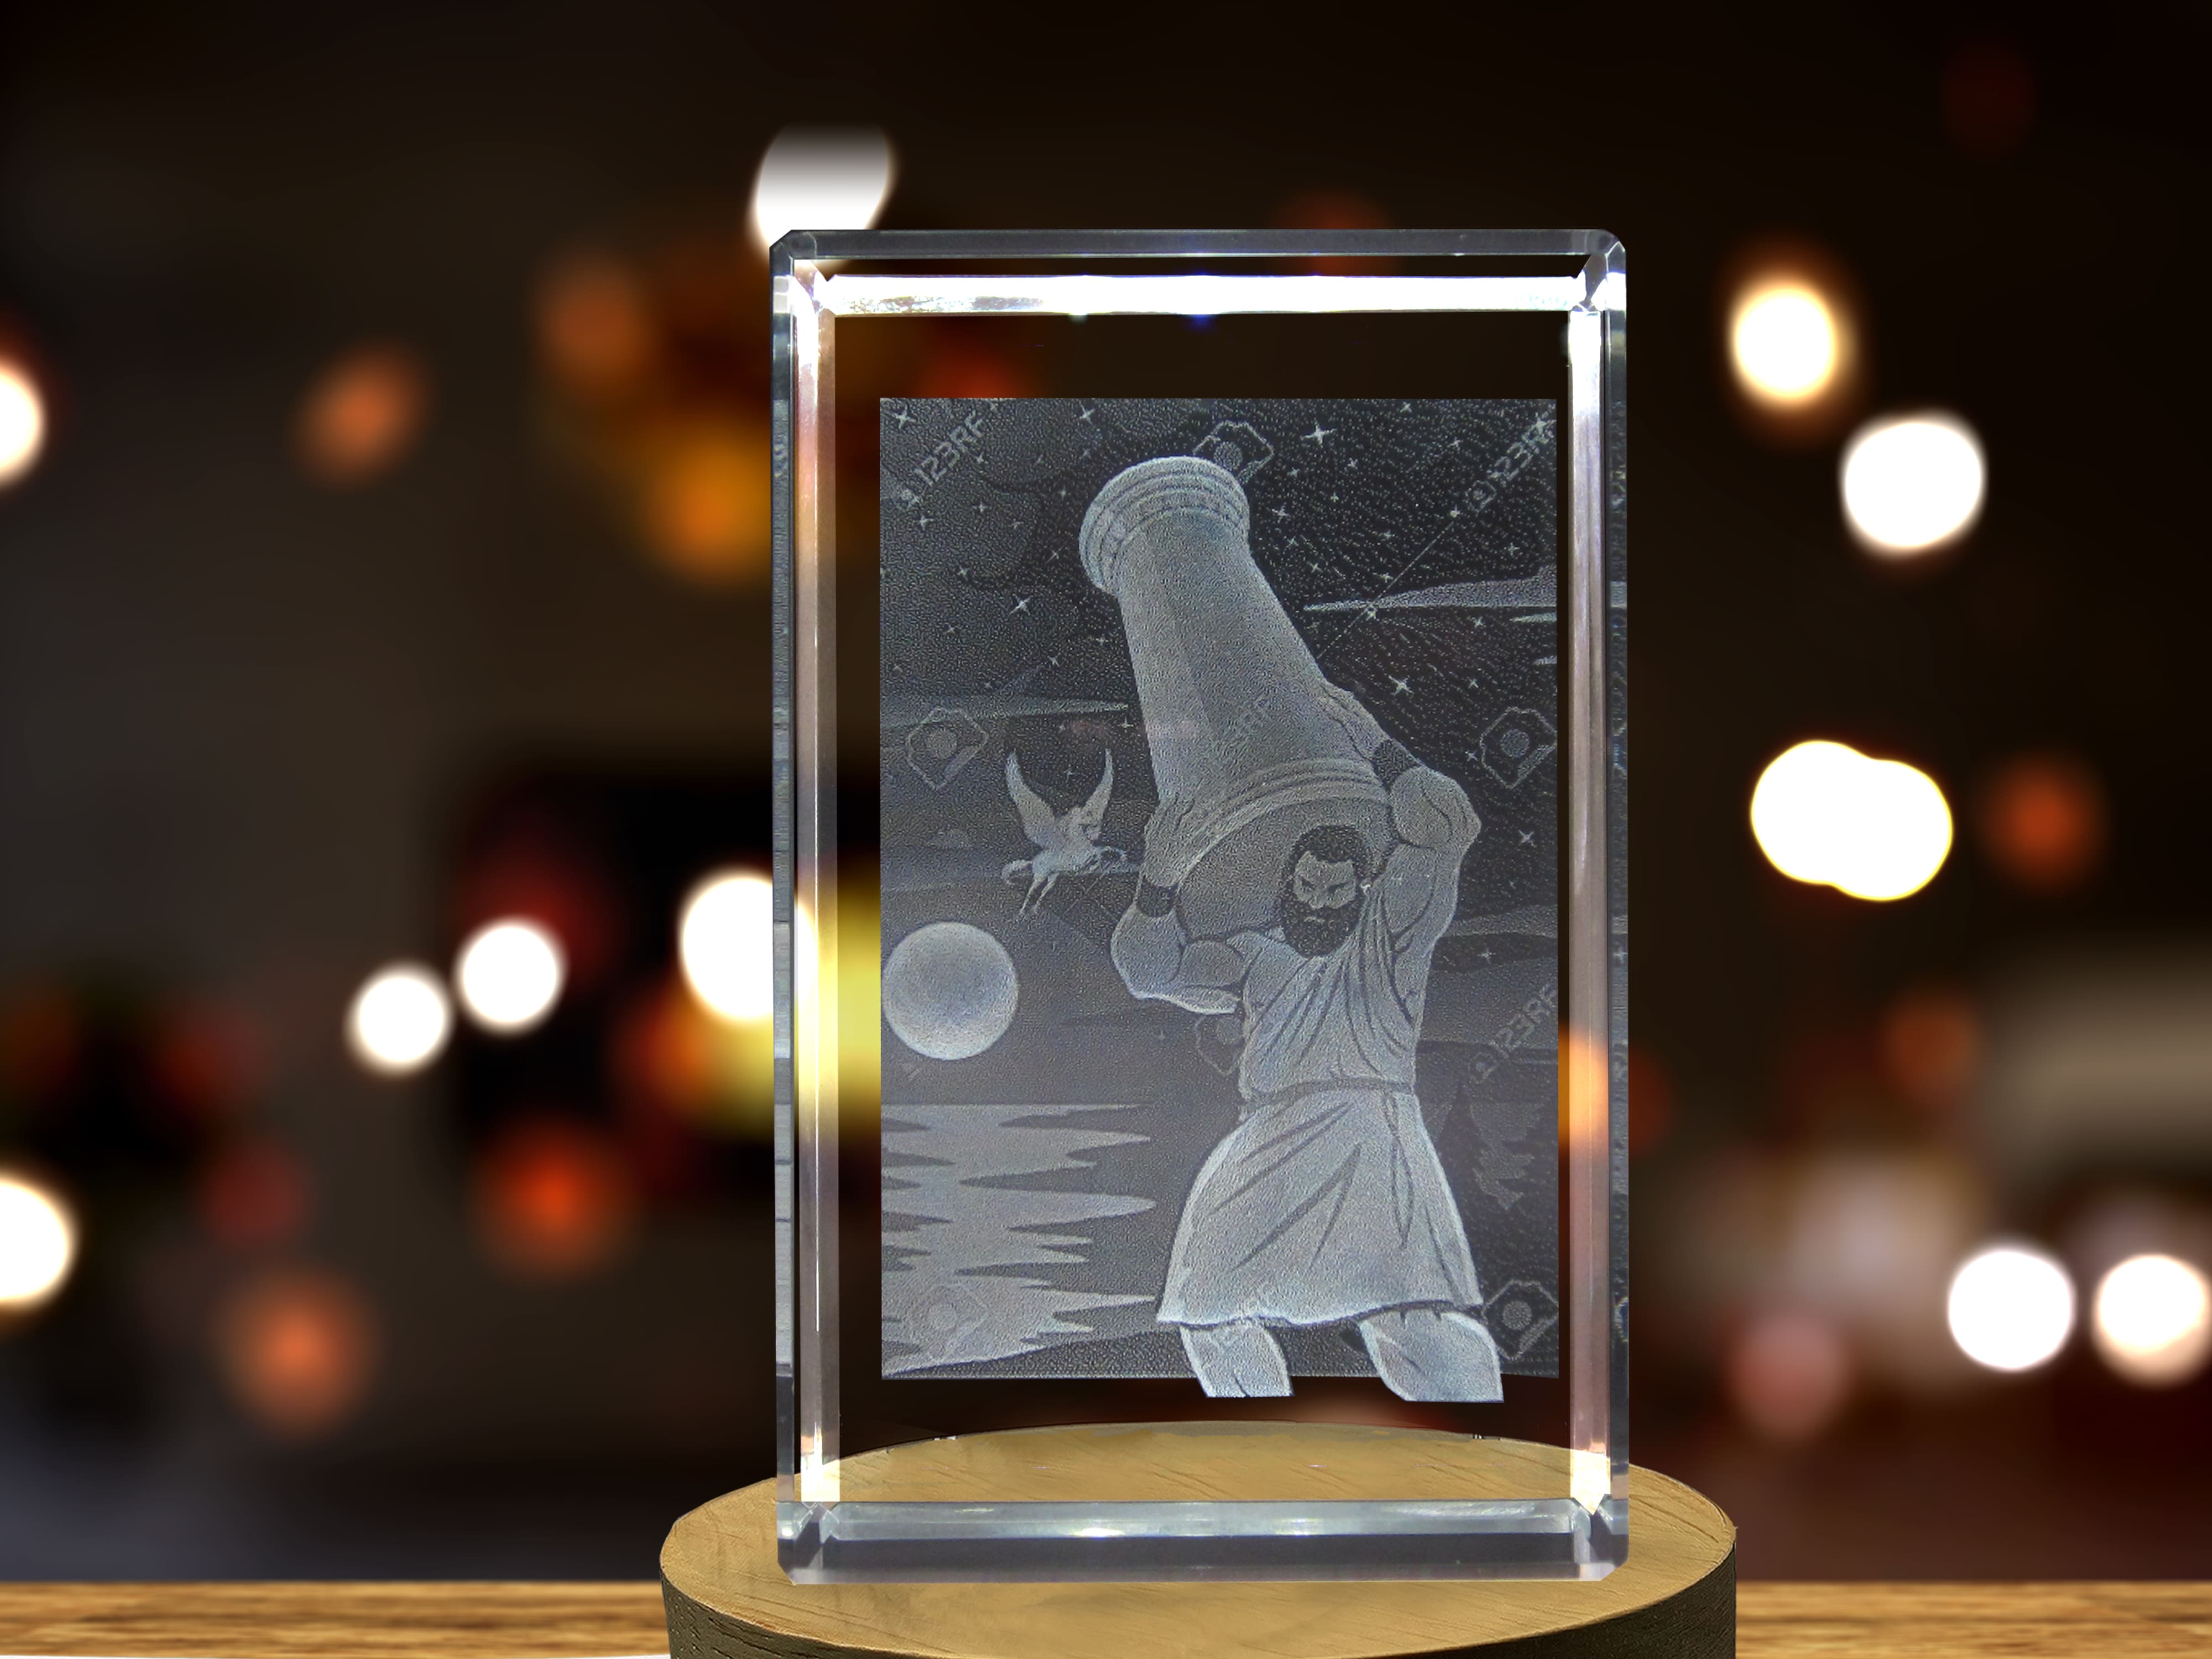 Giants 3D Engraved Crystal 3D Engraved Crystal Keepsake/Gift/Decor/Collectible/Souvenir A&B Crystal Collection